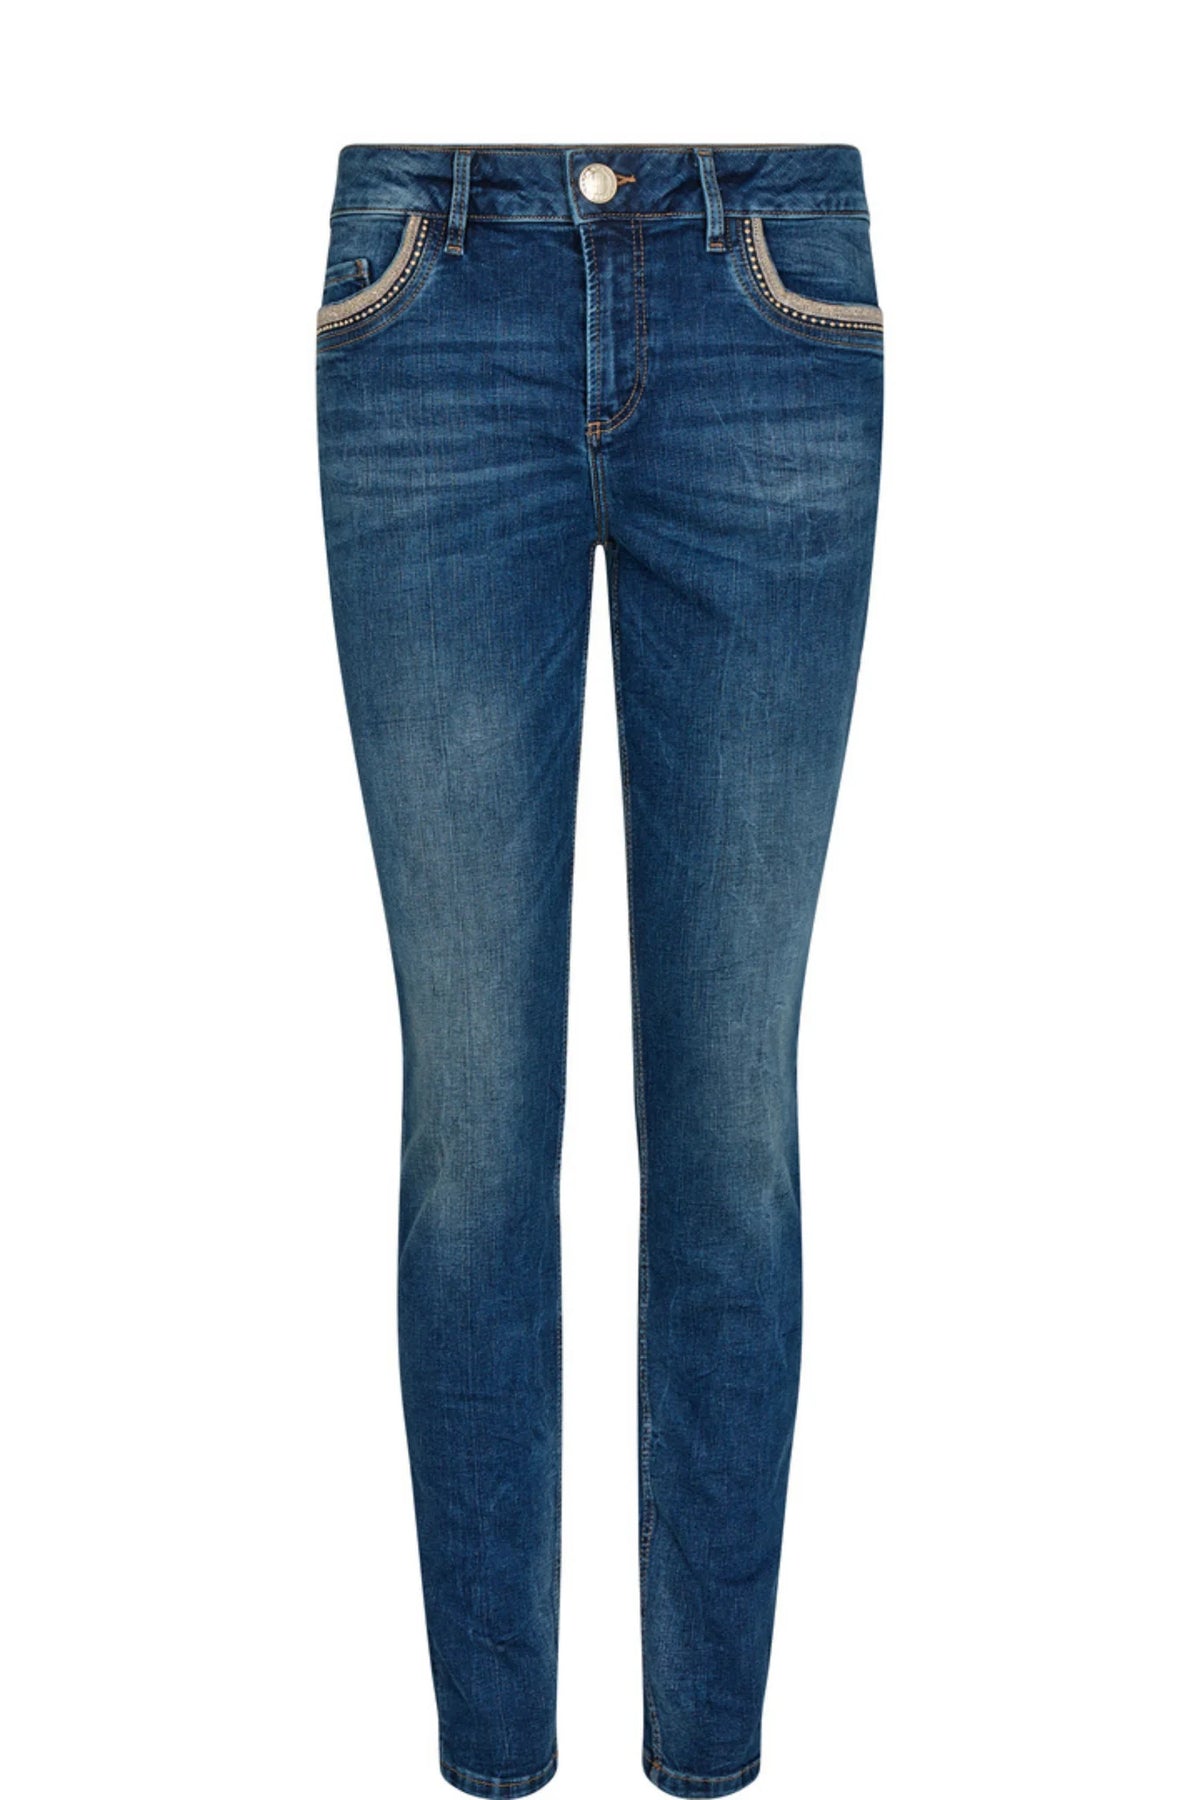 Mos Mosh - Bradford Glam Jeans